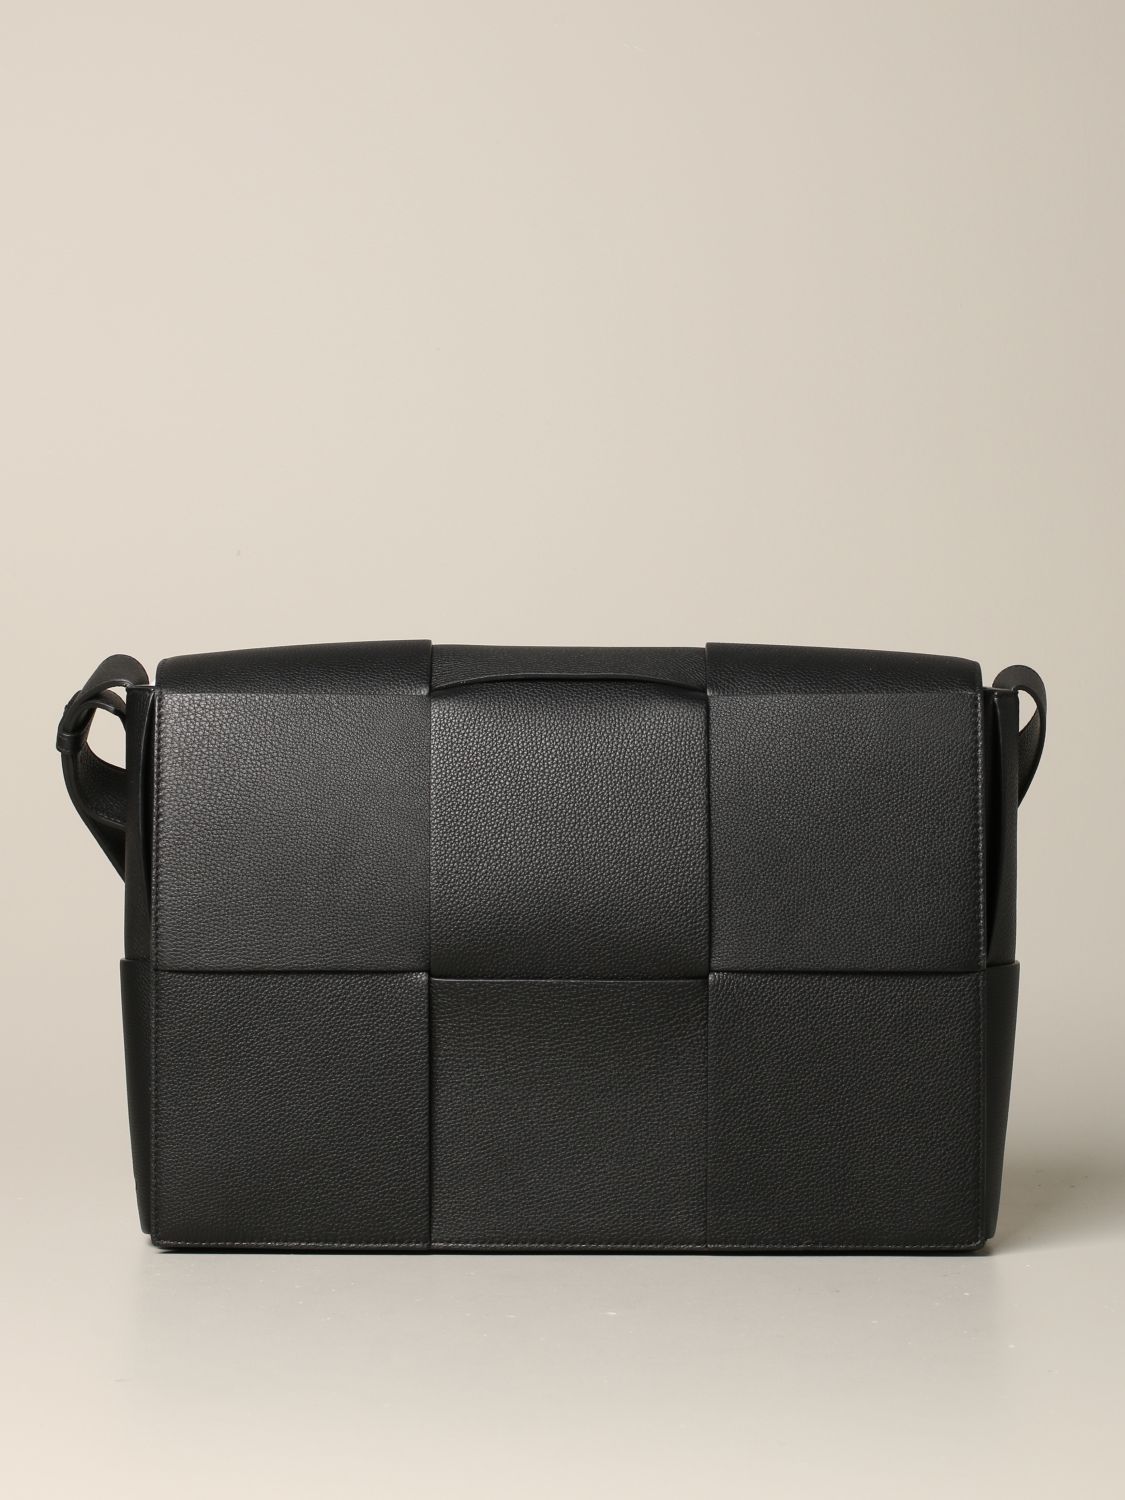 BOTTEGA VENETA: bag in woven leather - Black | Bottega Veneta shoulder